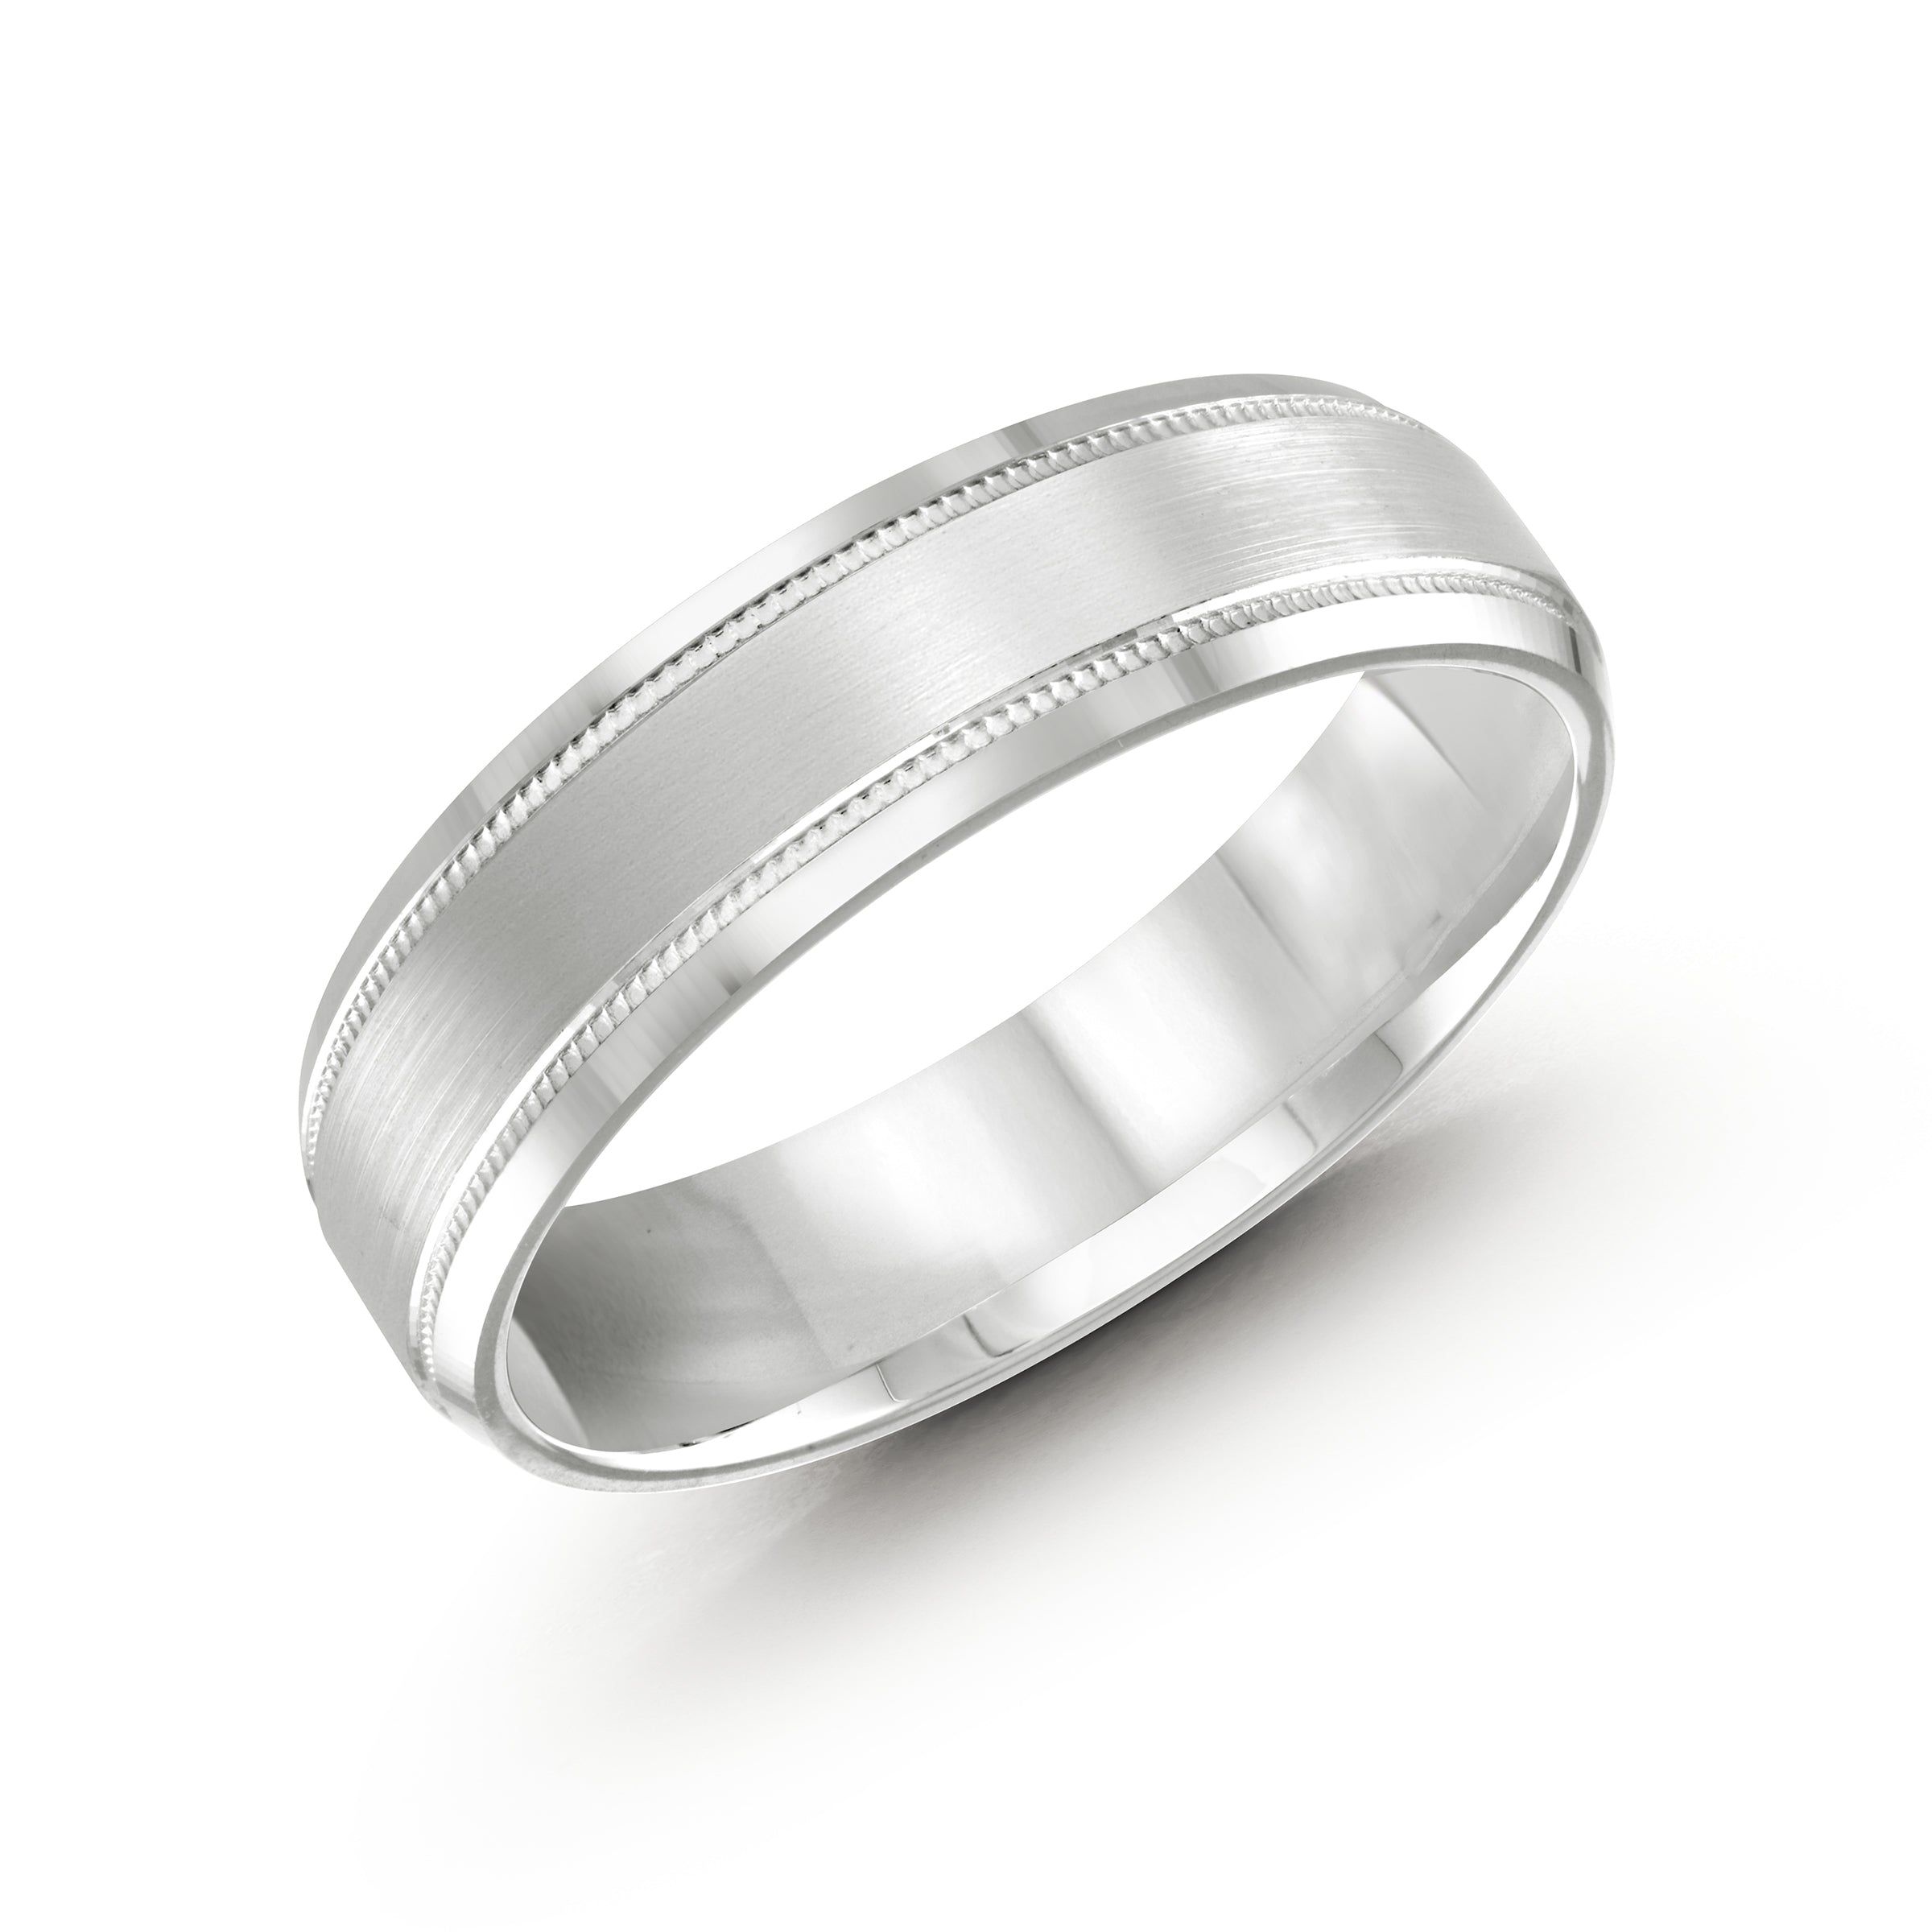 Men's 6mm Satin-finish Comfort-fit Wedding Ring With Milgrain